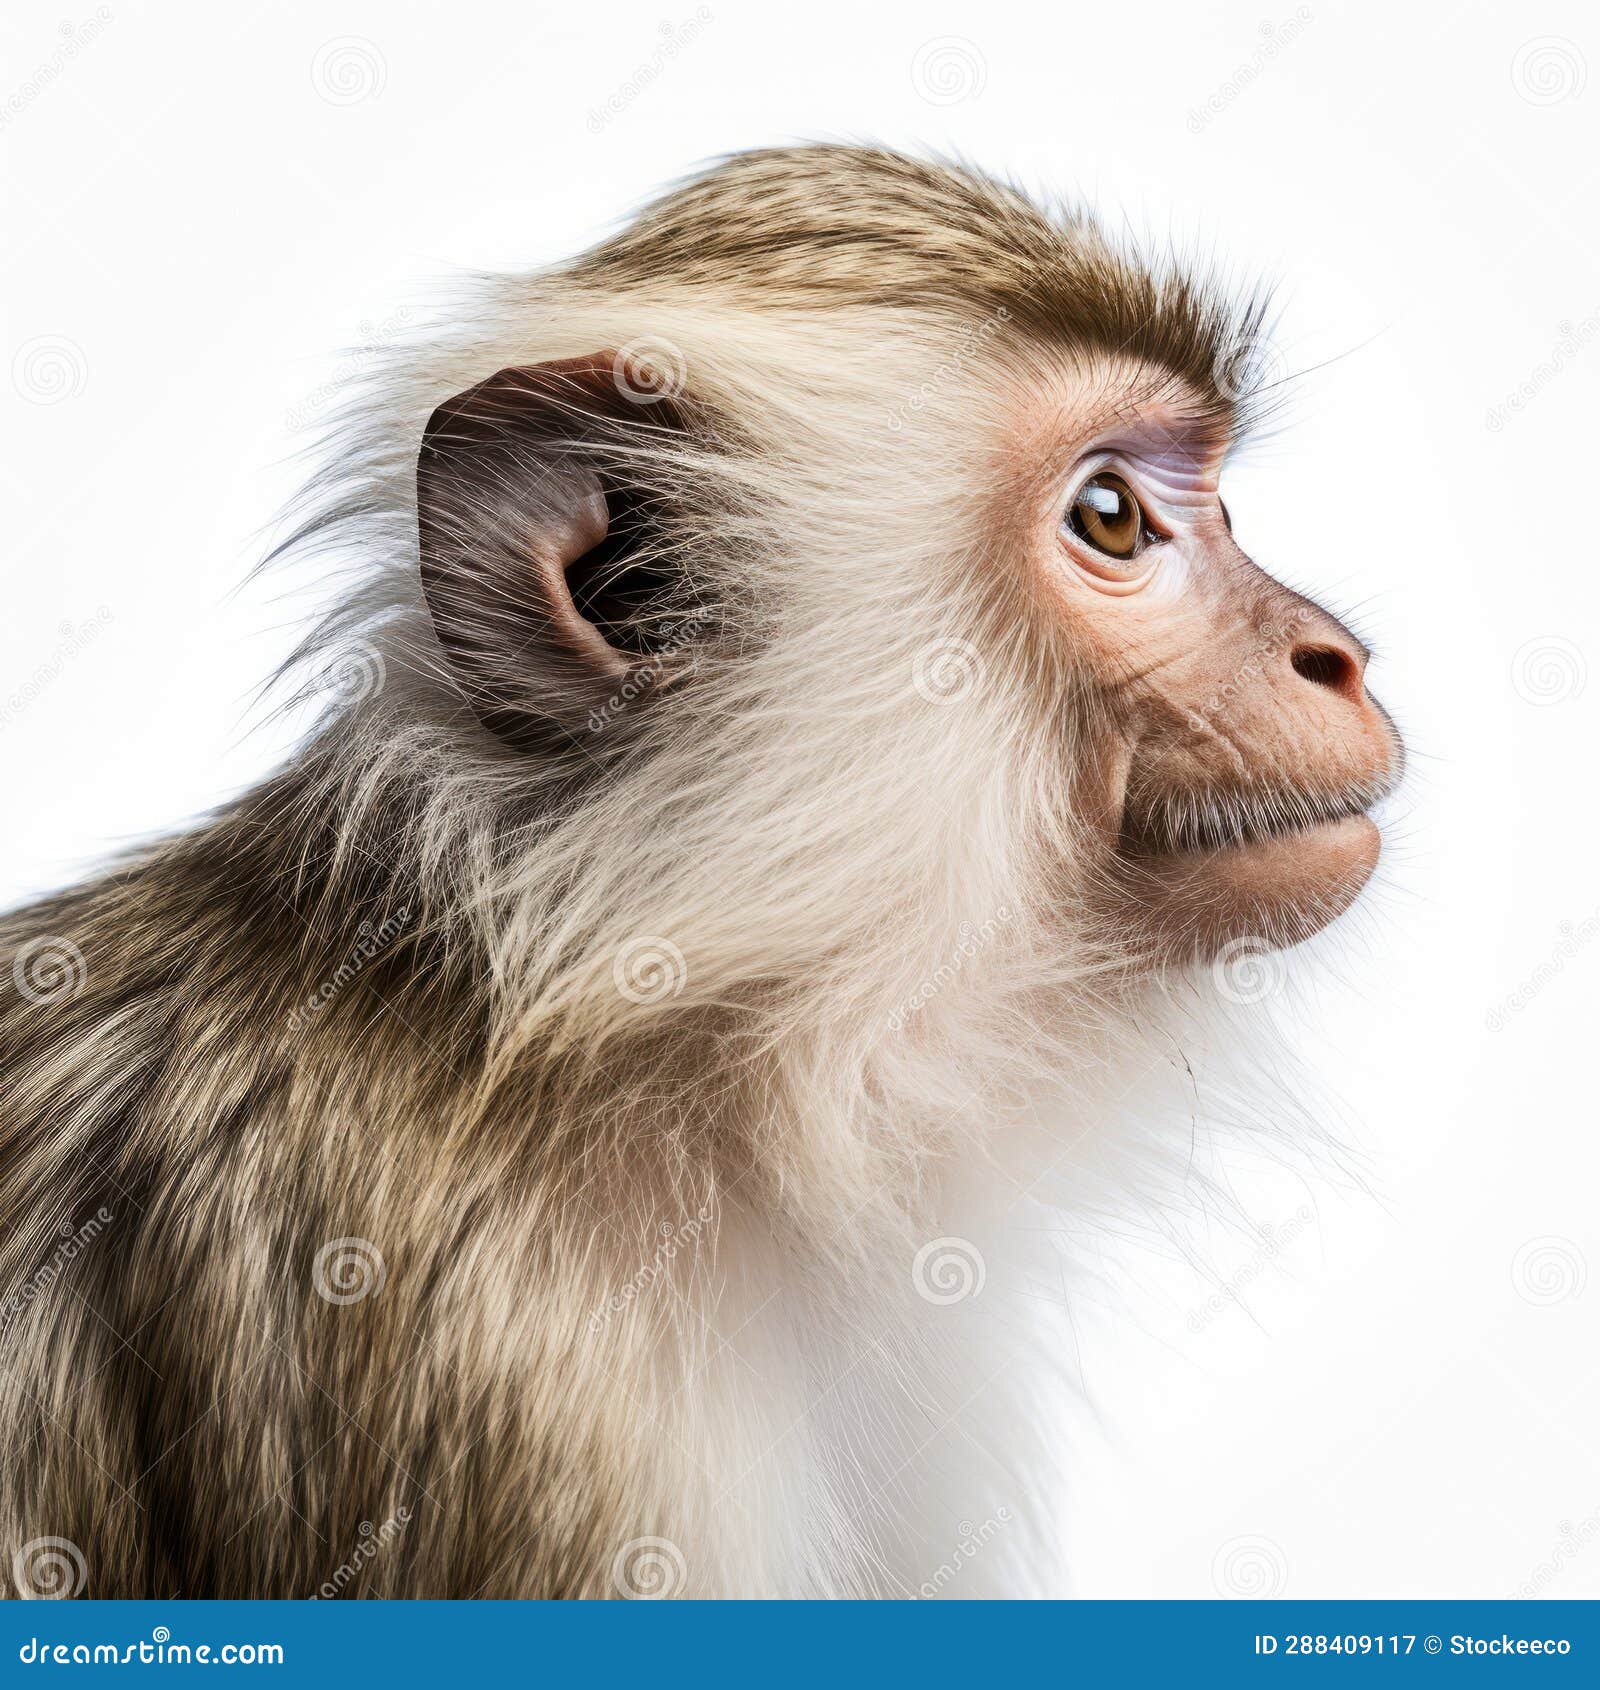 ultradetailed close-up portrait of monkey on white background